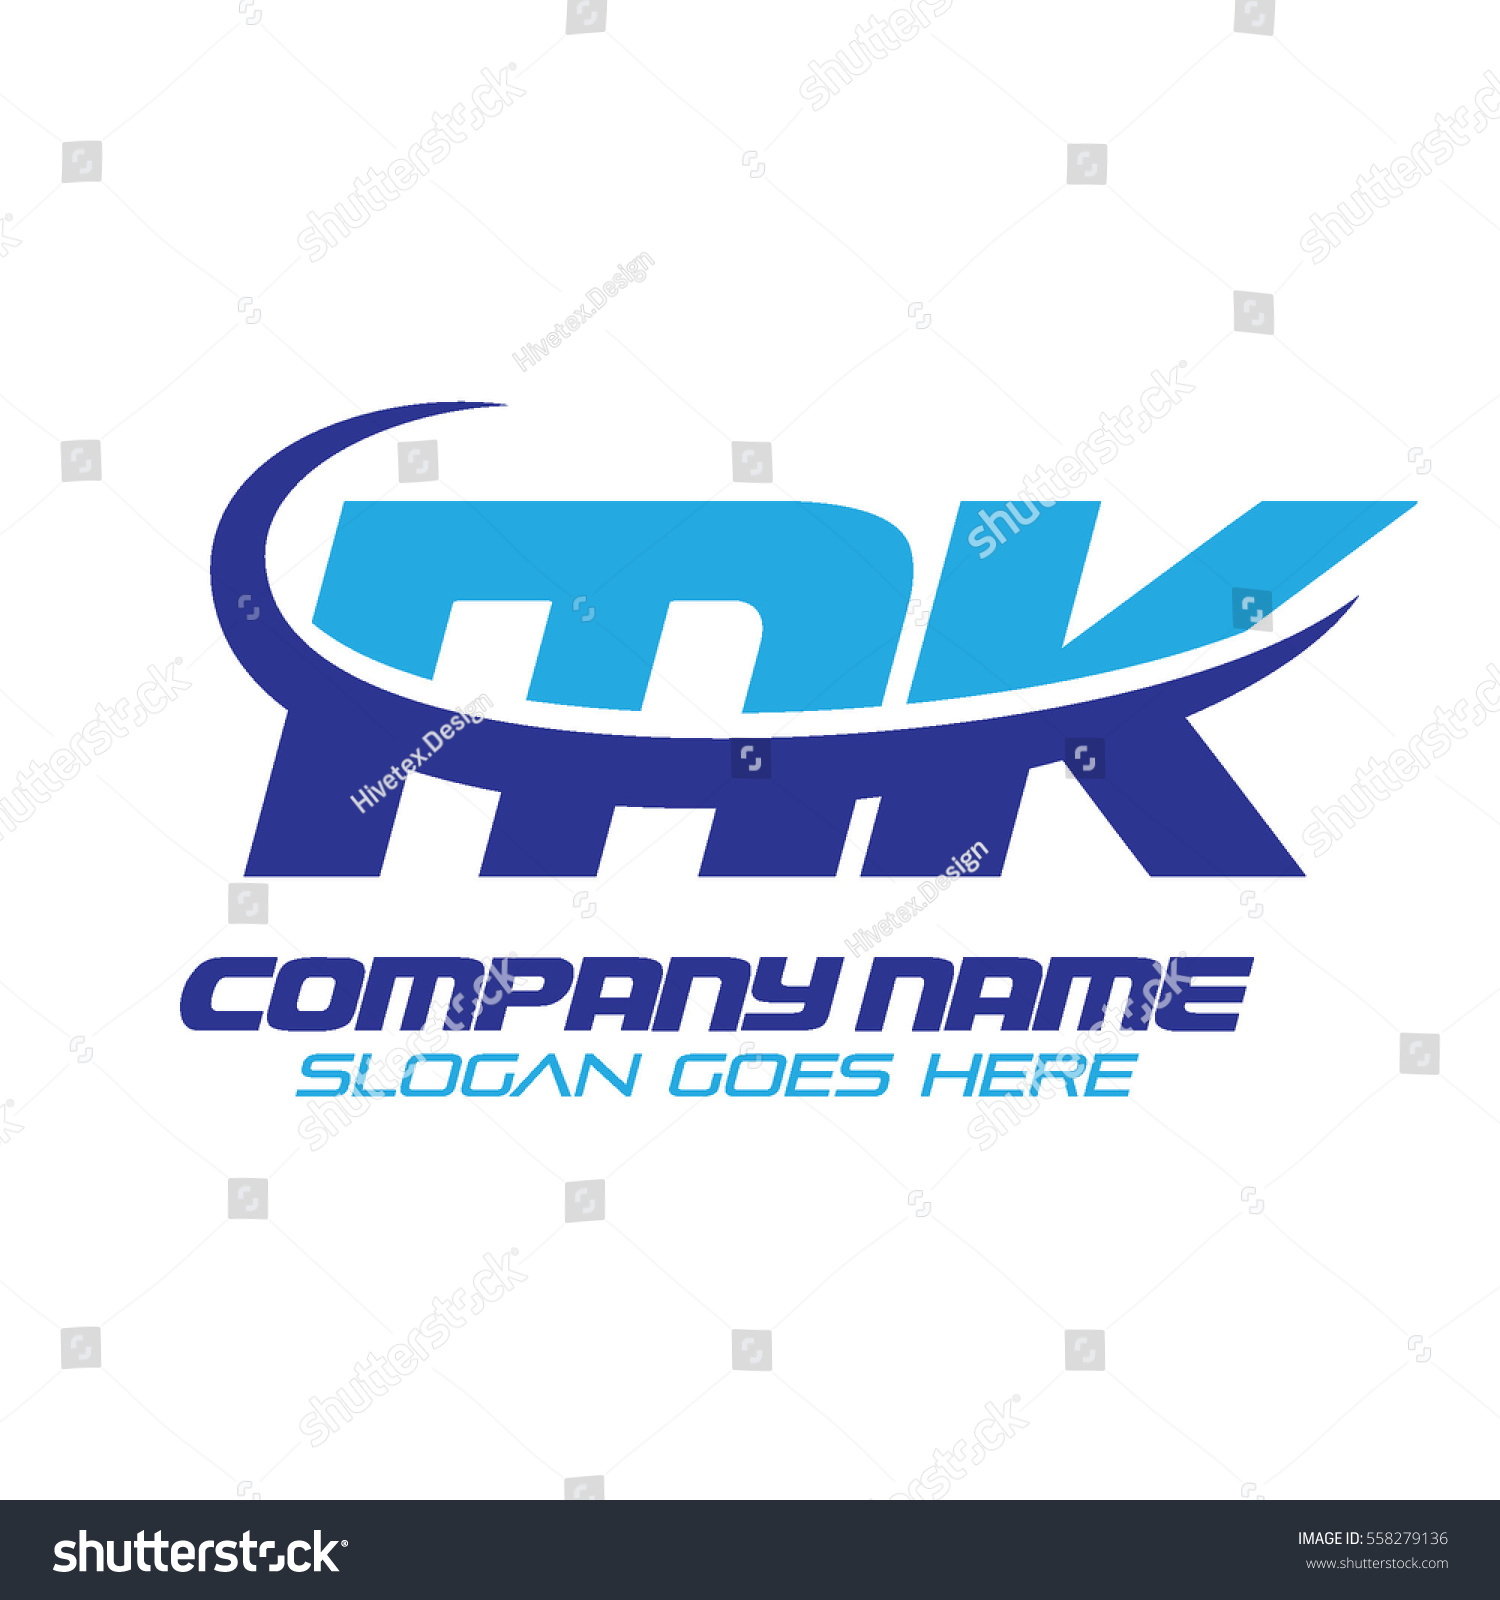 mk new logo